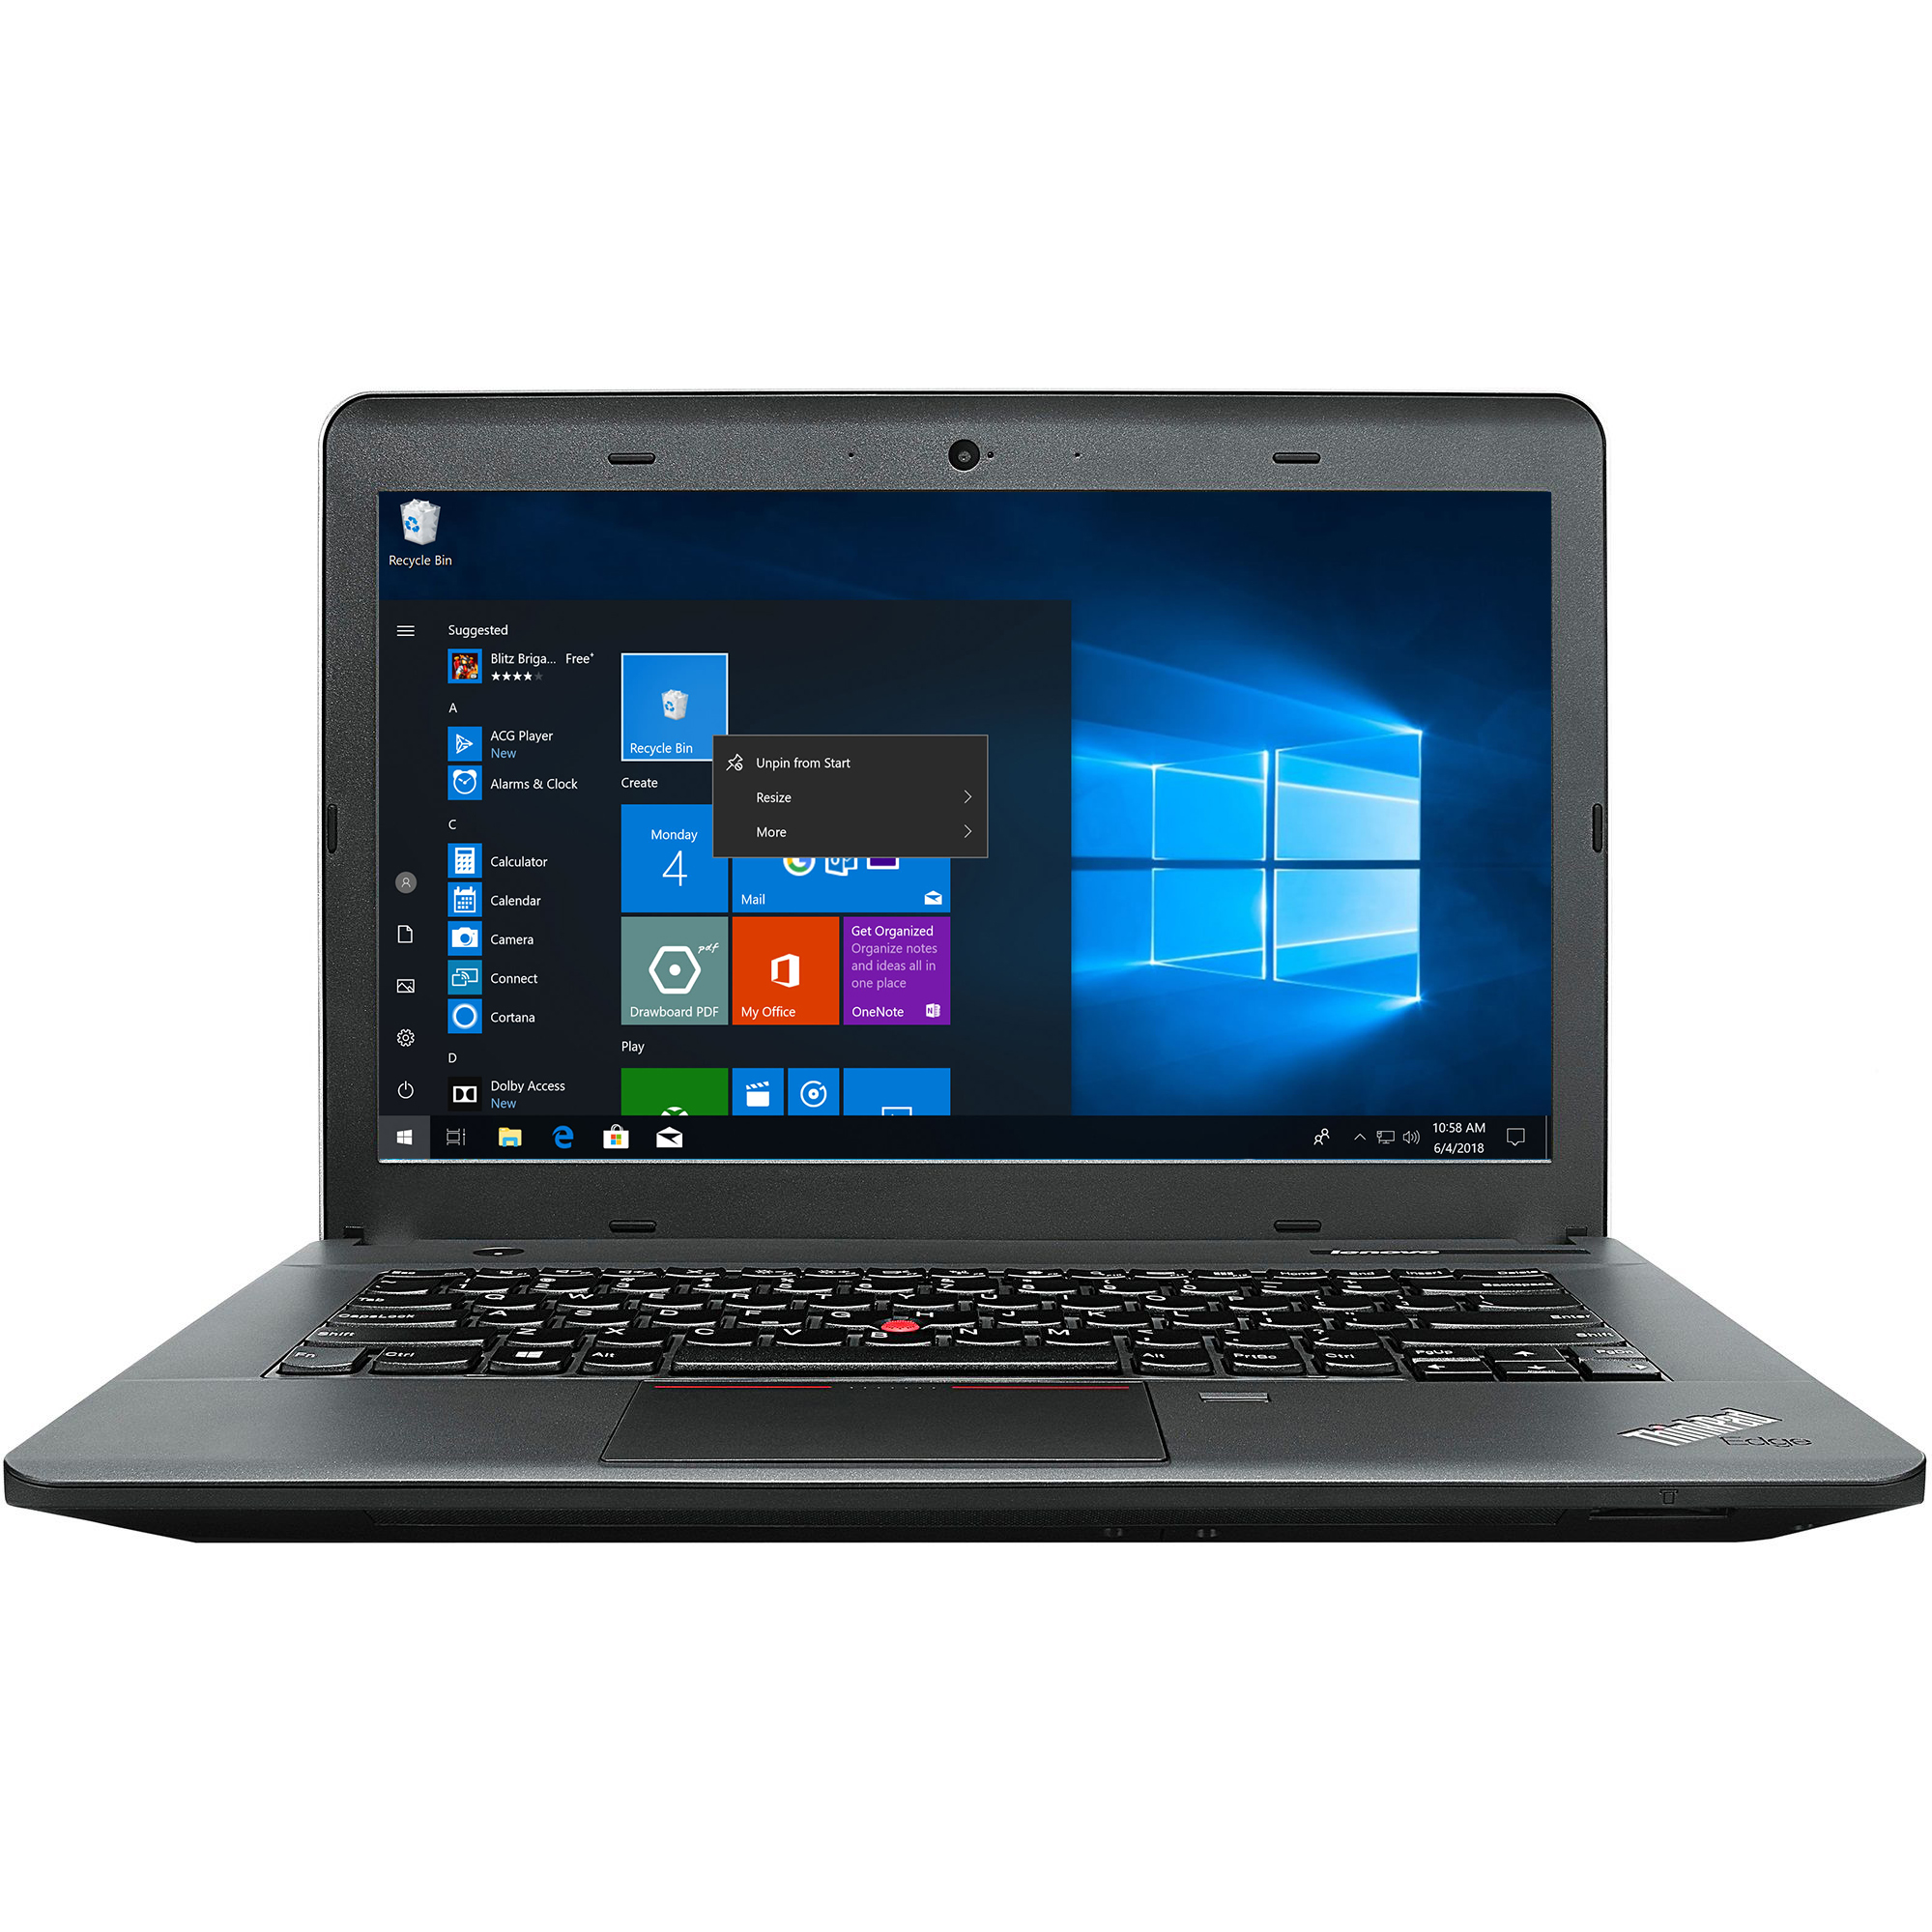 Laptop Lenovo ThinkPad E540, Intel Core i7-4702MQ 2.20GHz, 8GB DDR3, 240GB SSD, DVD-RW, 15.6 Inch TouchScreen, Webcam, Grad A-